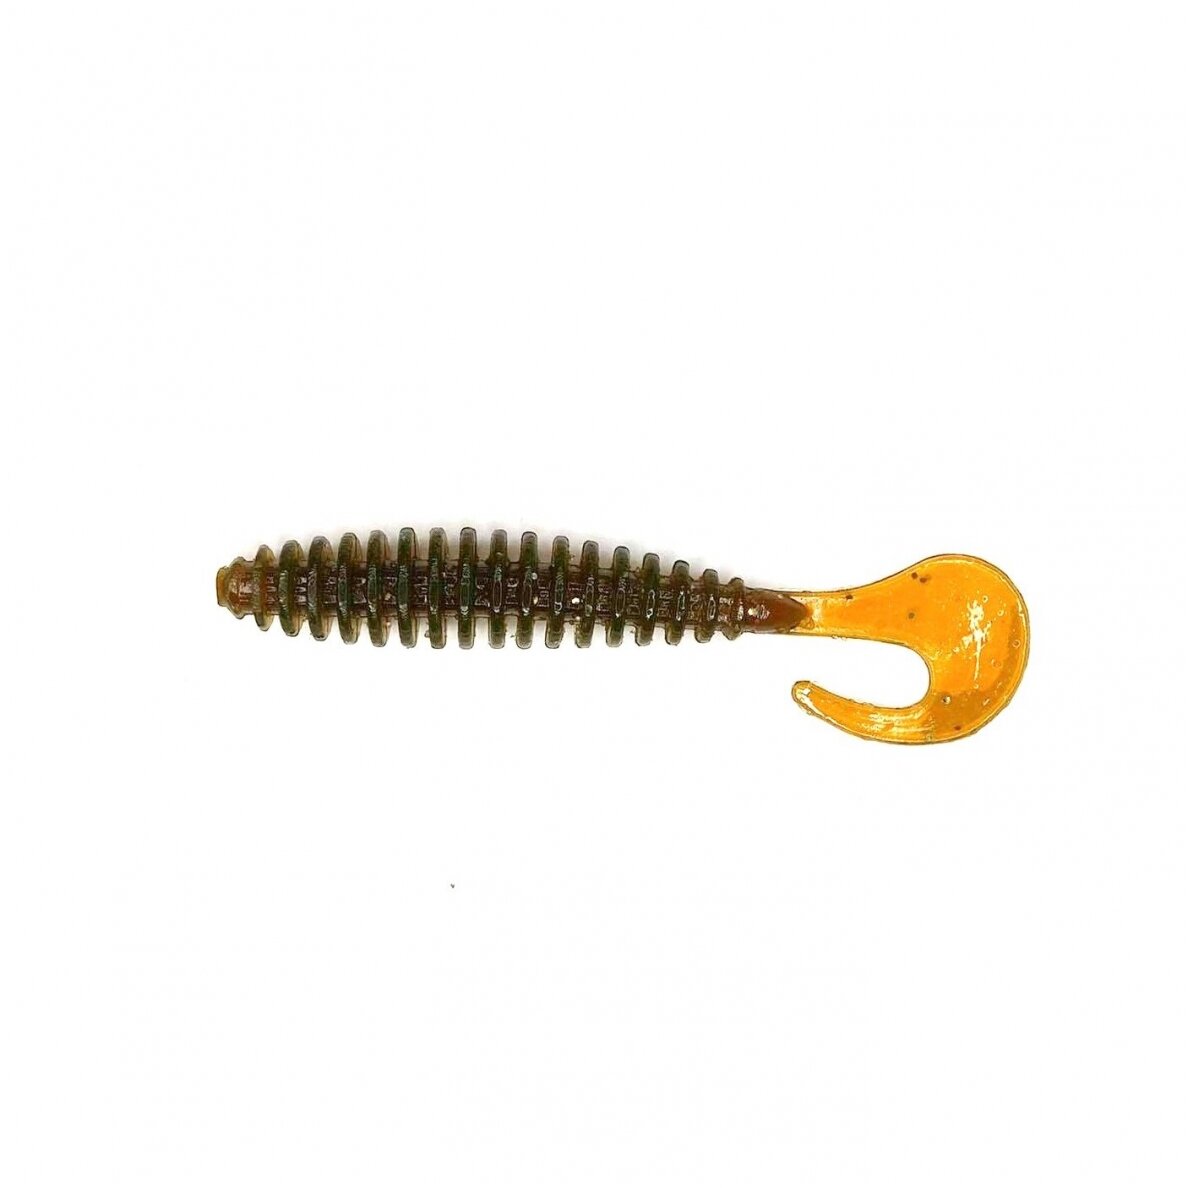 Perchik worm tail 3 part